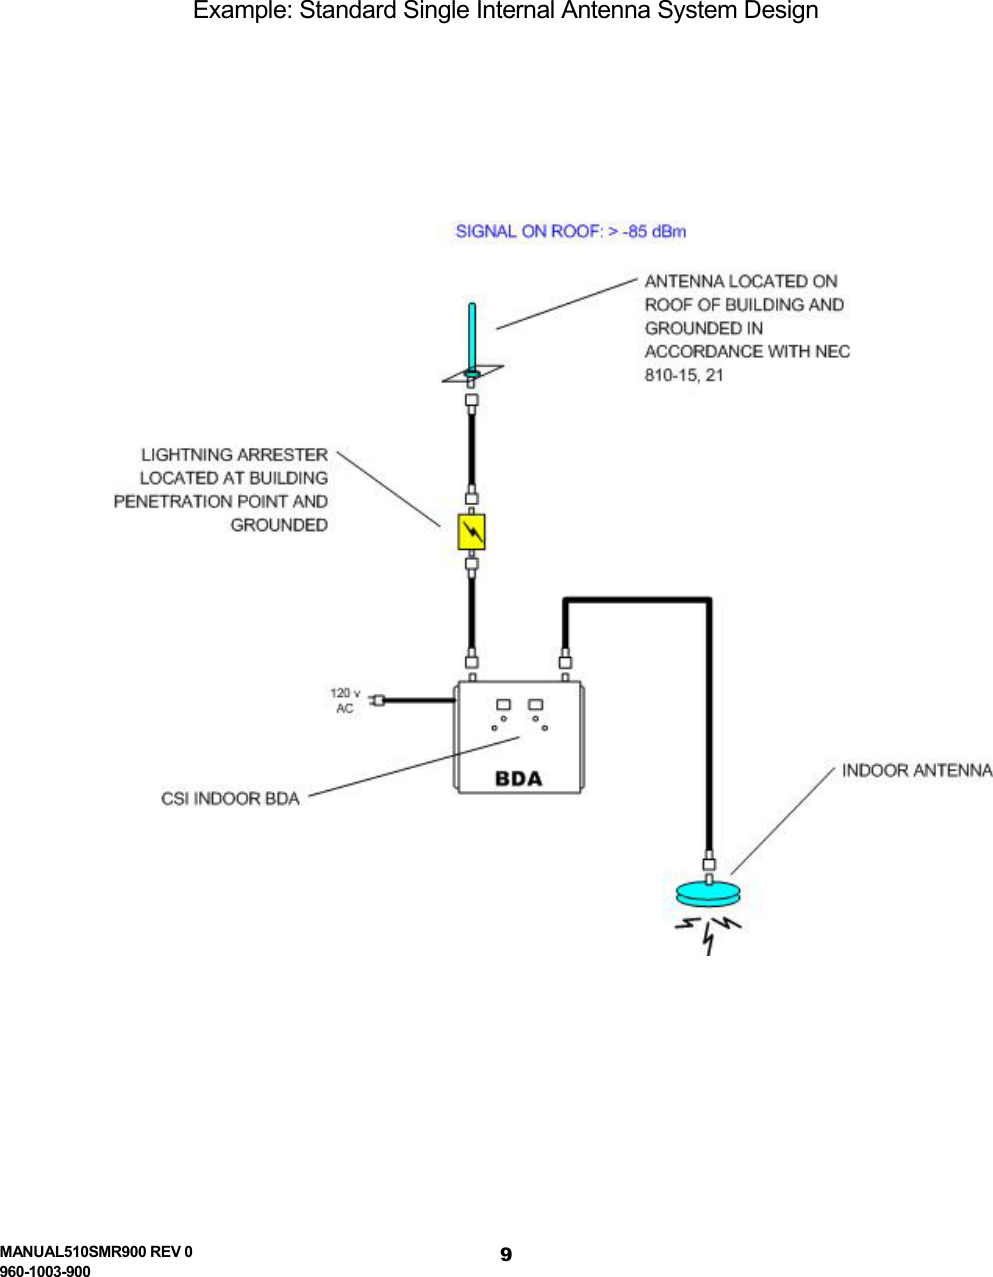  MANUAL510SMR900 REV 0 960-1003-900 9  Example: Standard Single Internal Antenna System Design         